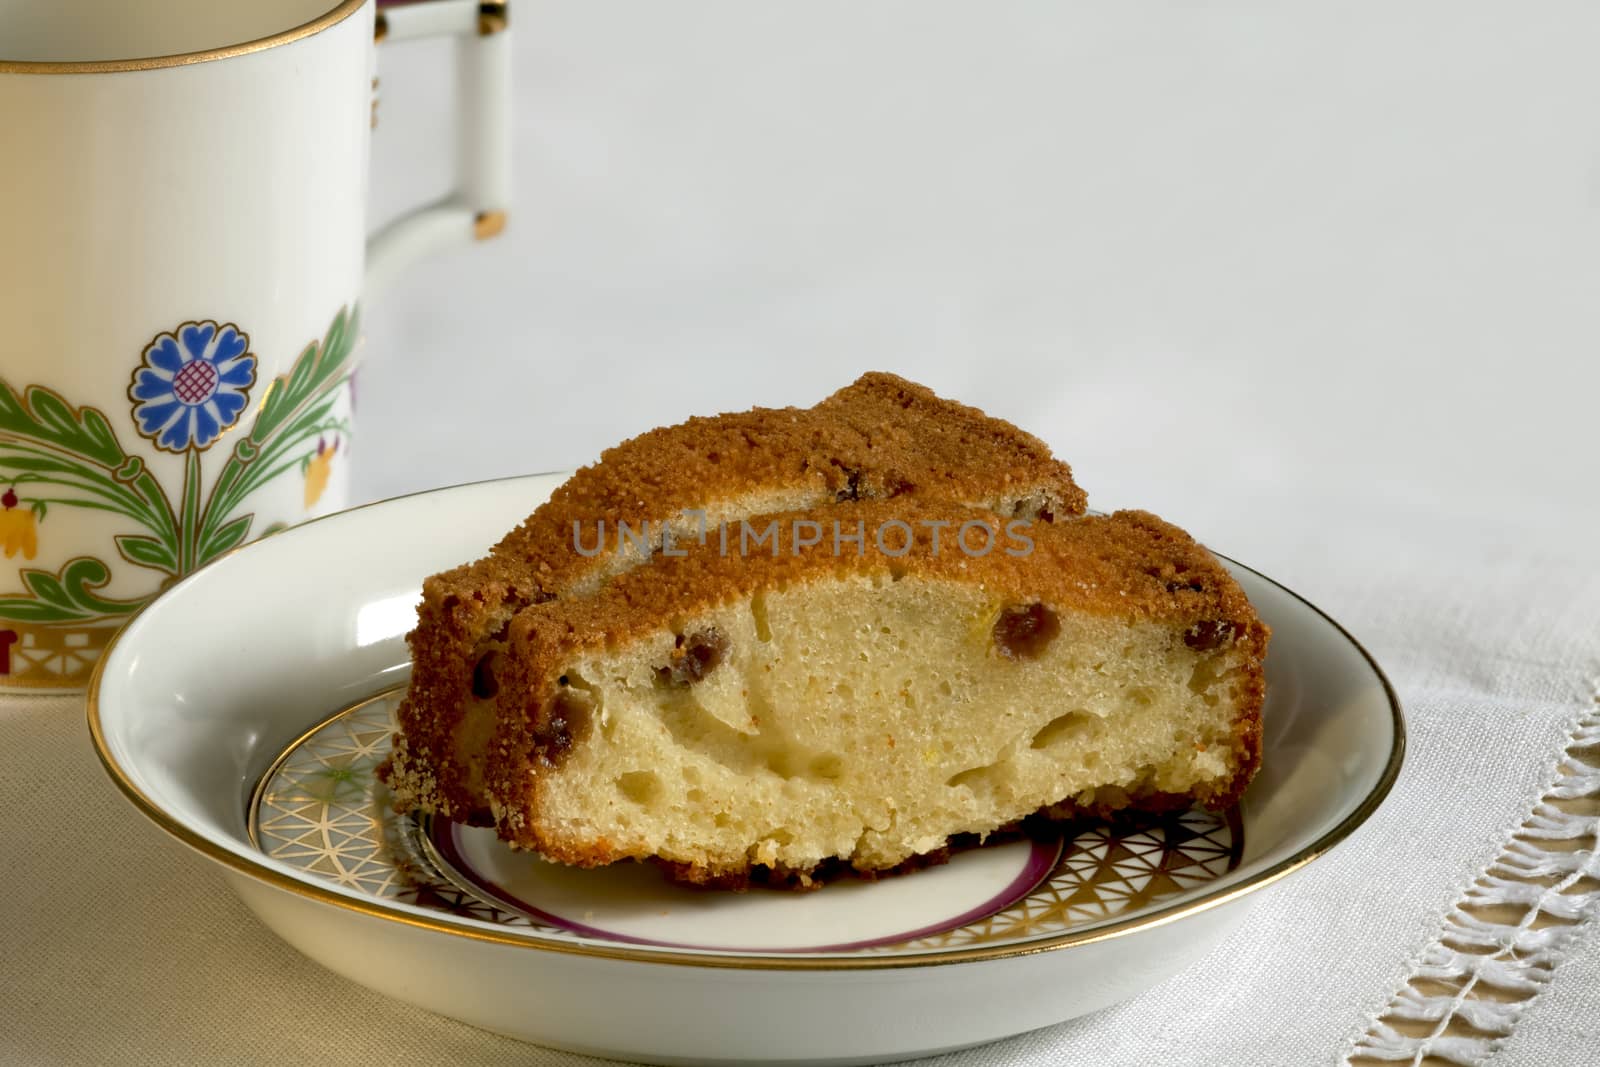 cake with raisins and ruddy crust by mrivserg